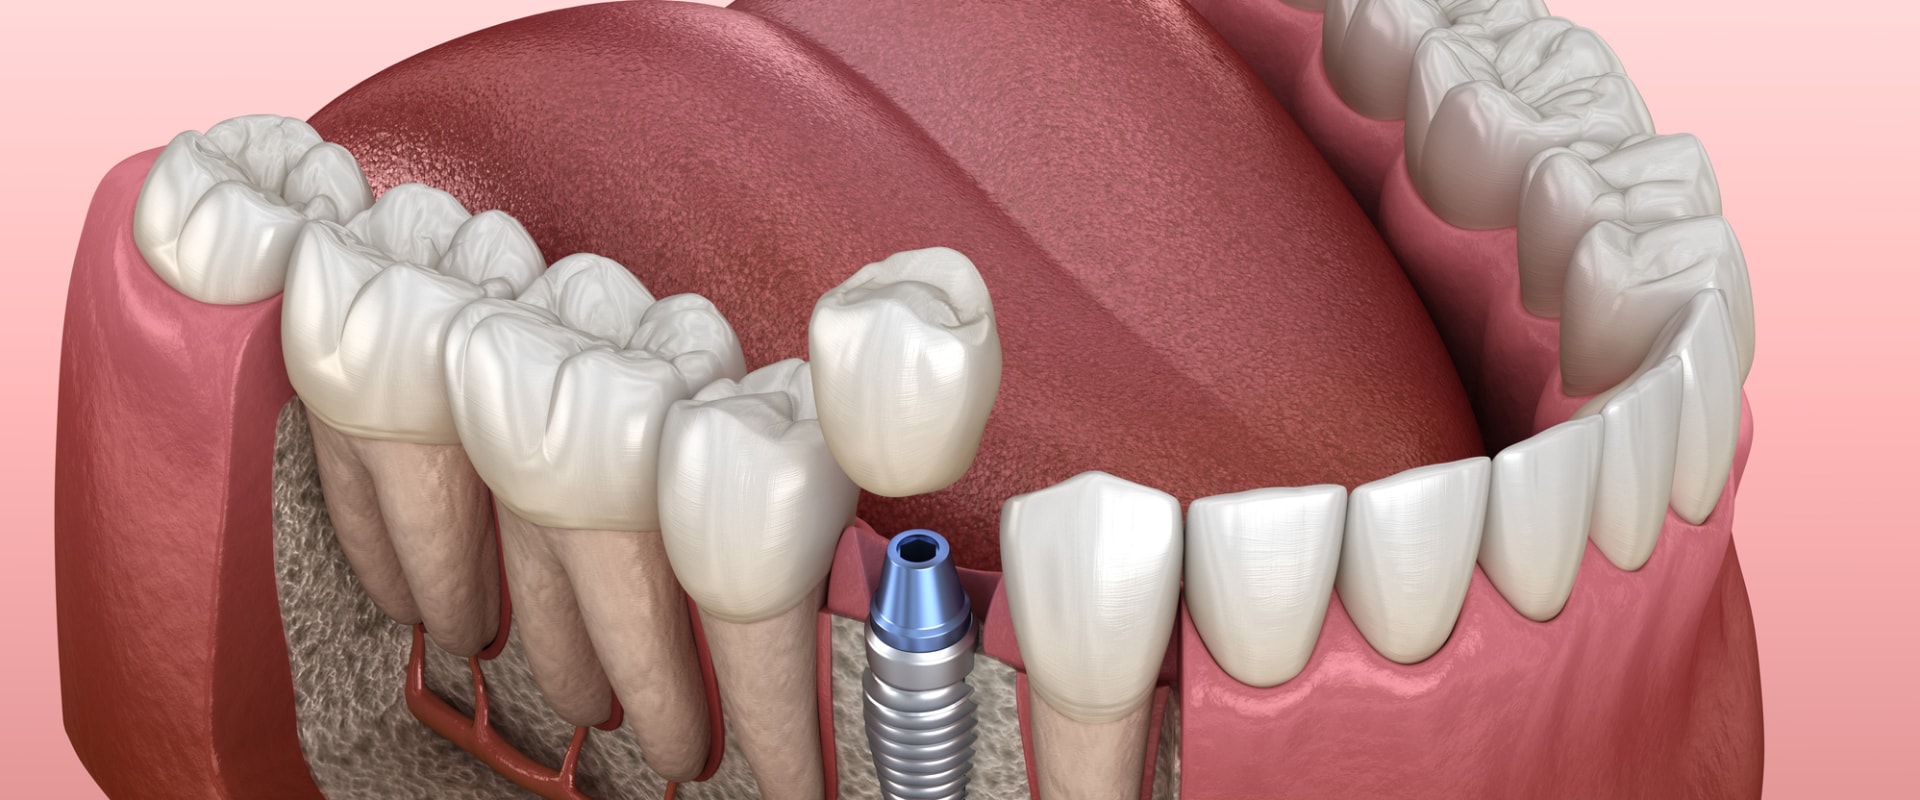 Are dental implants harmful?